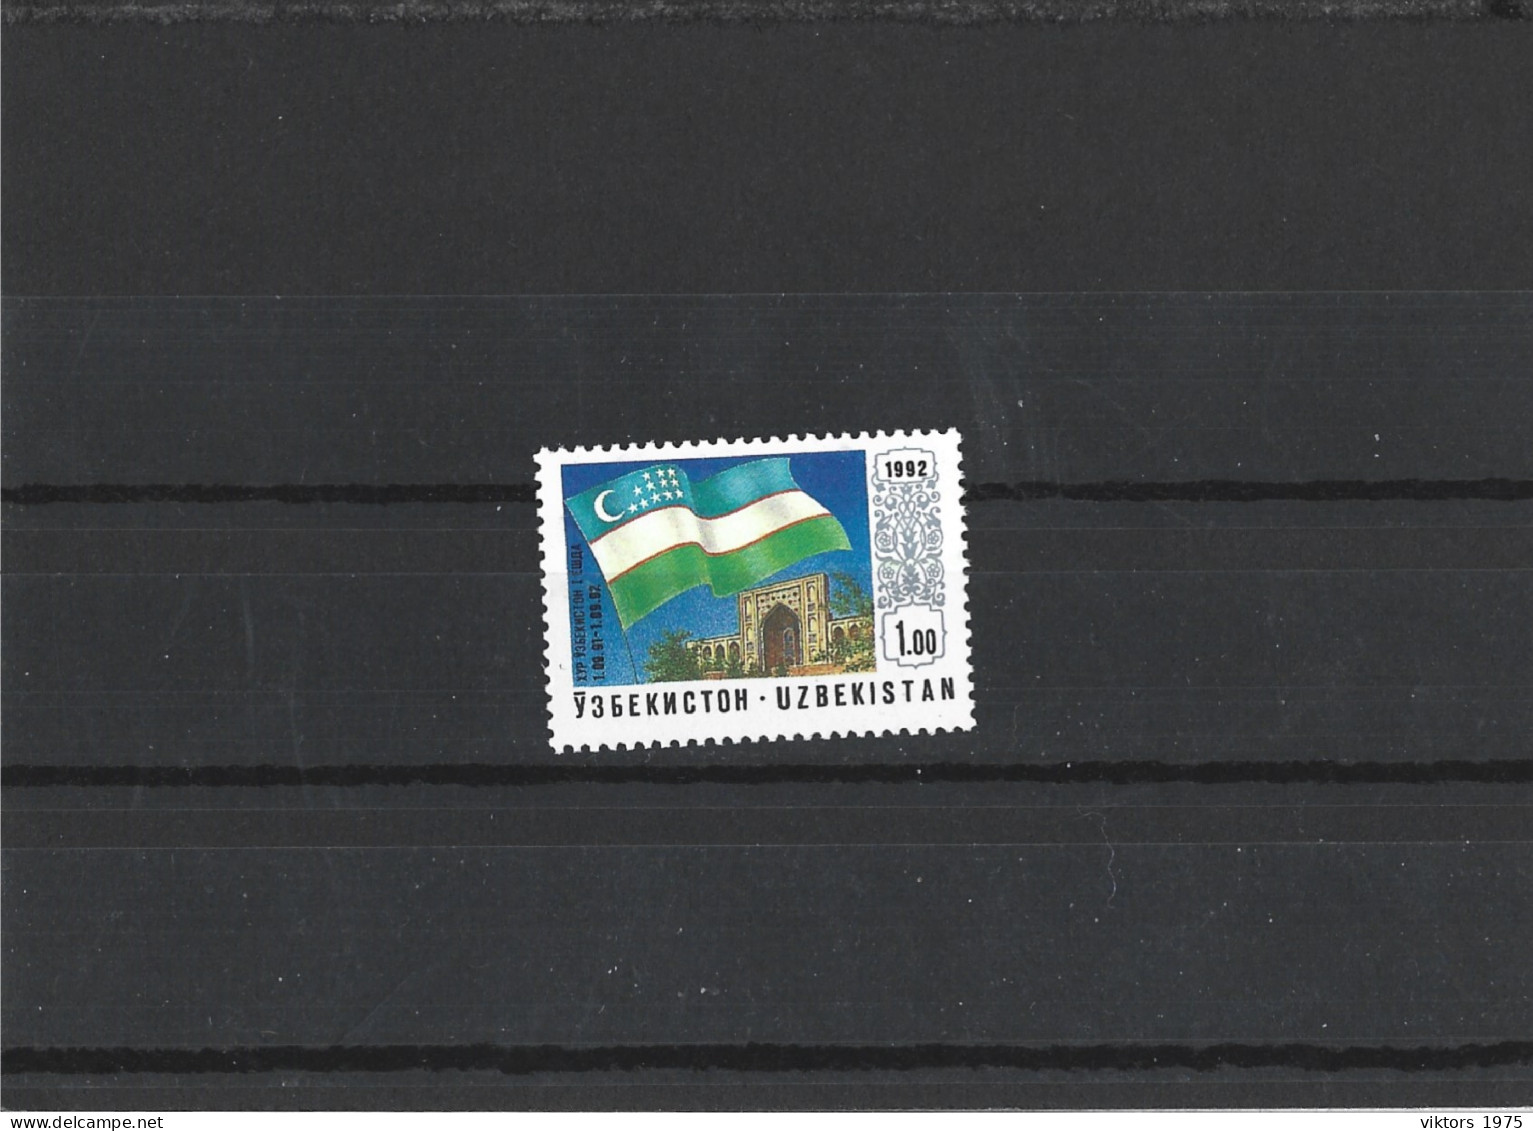 MNH Stamp Nr.3 In MICHEL Catalog - Uzbekistan